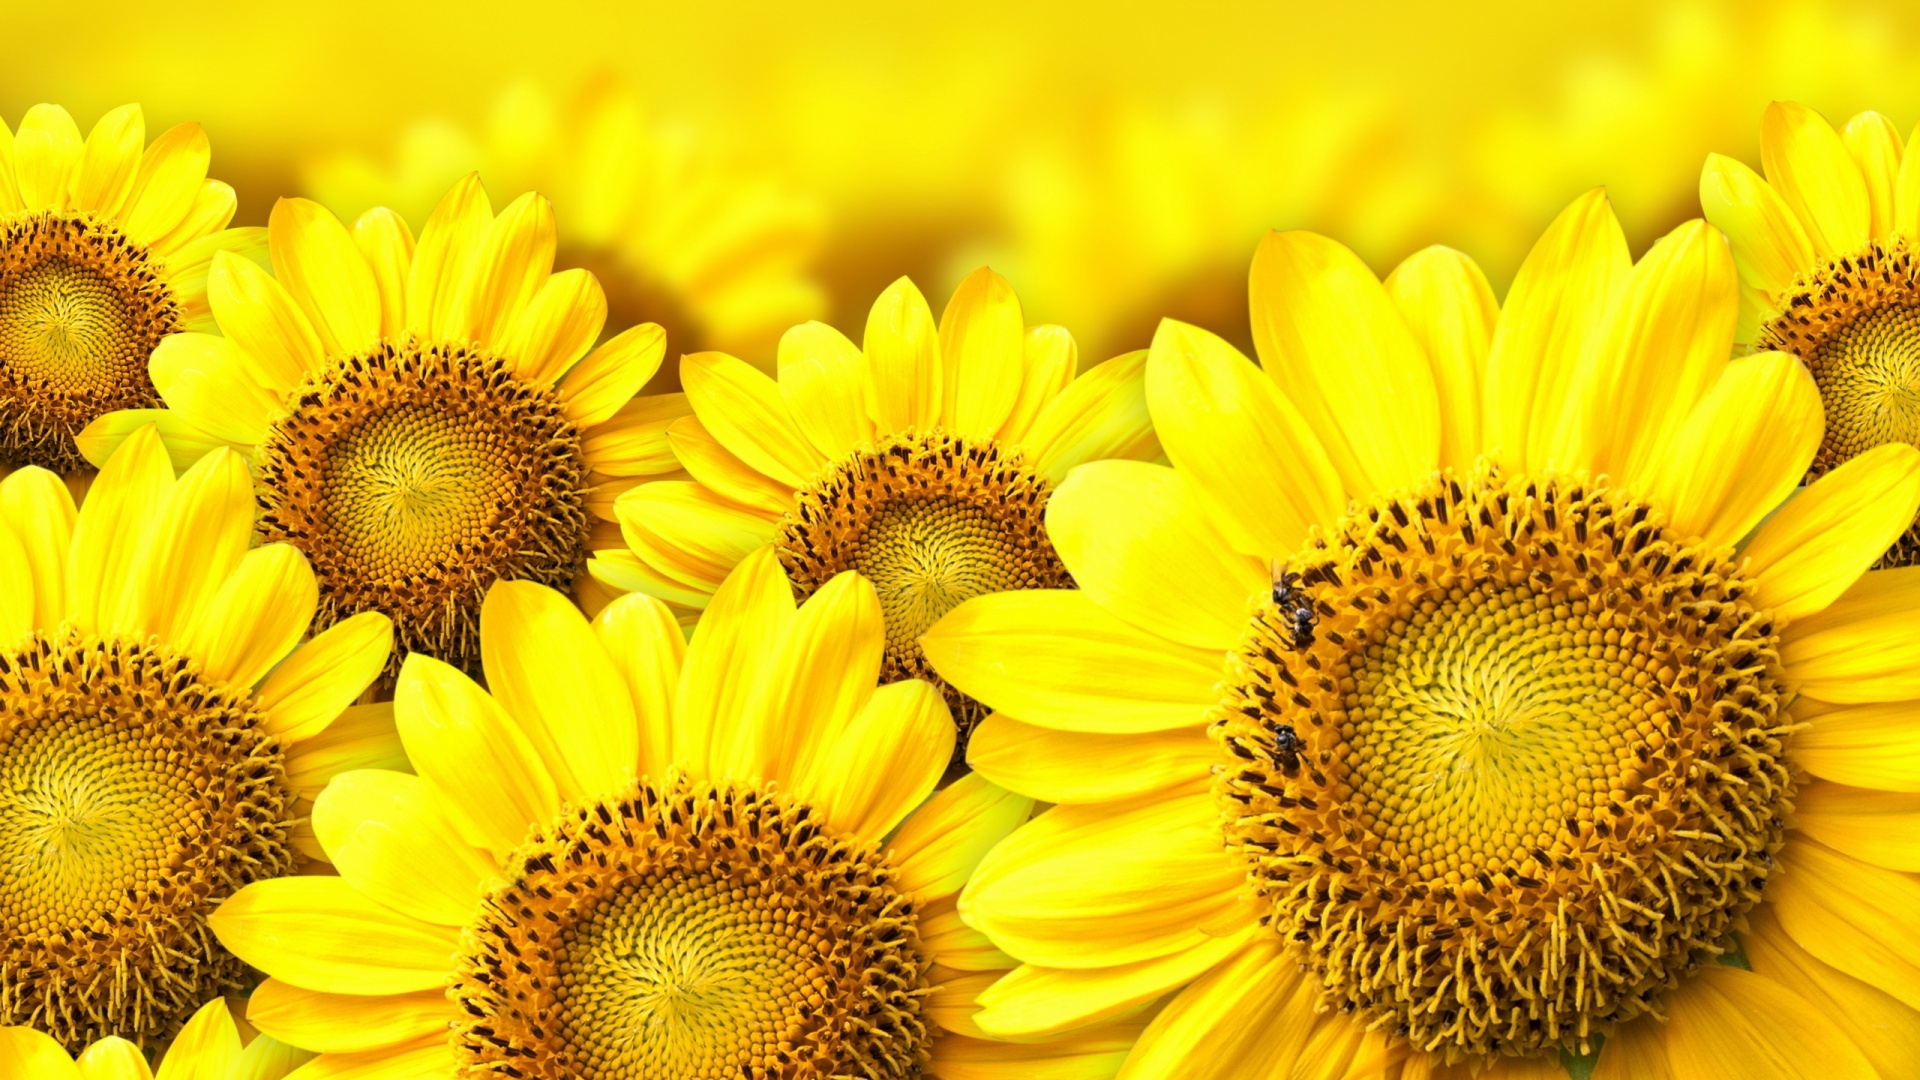 Sunflower Picture Ideas